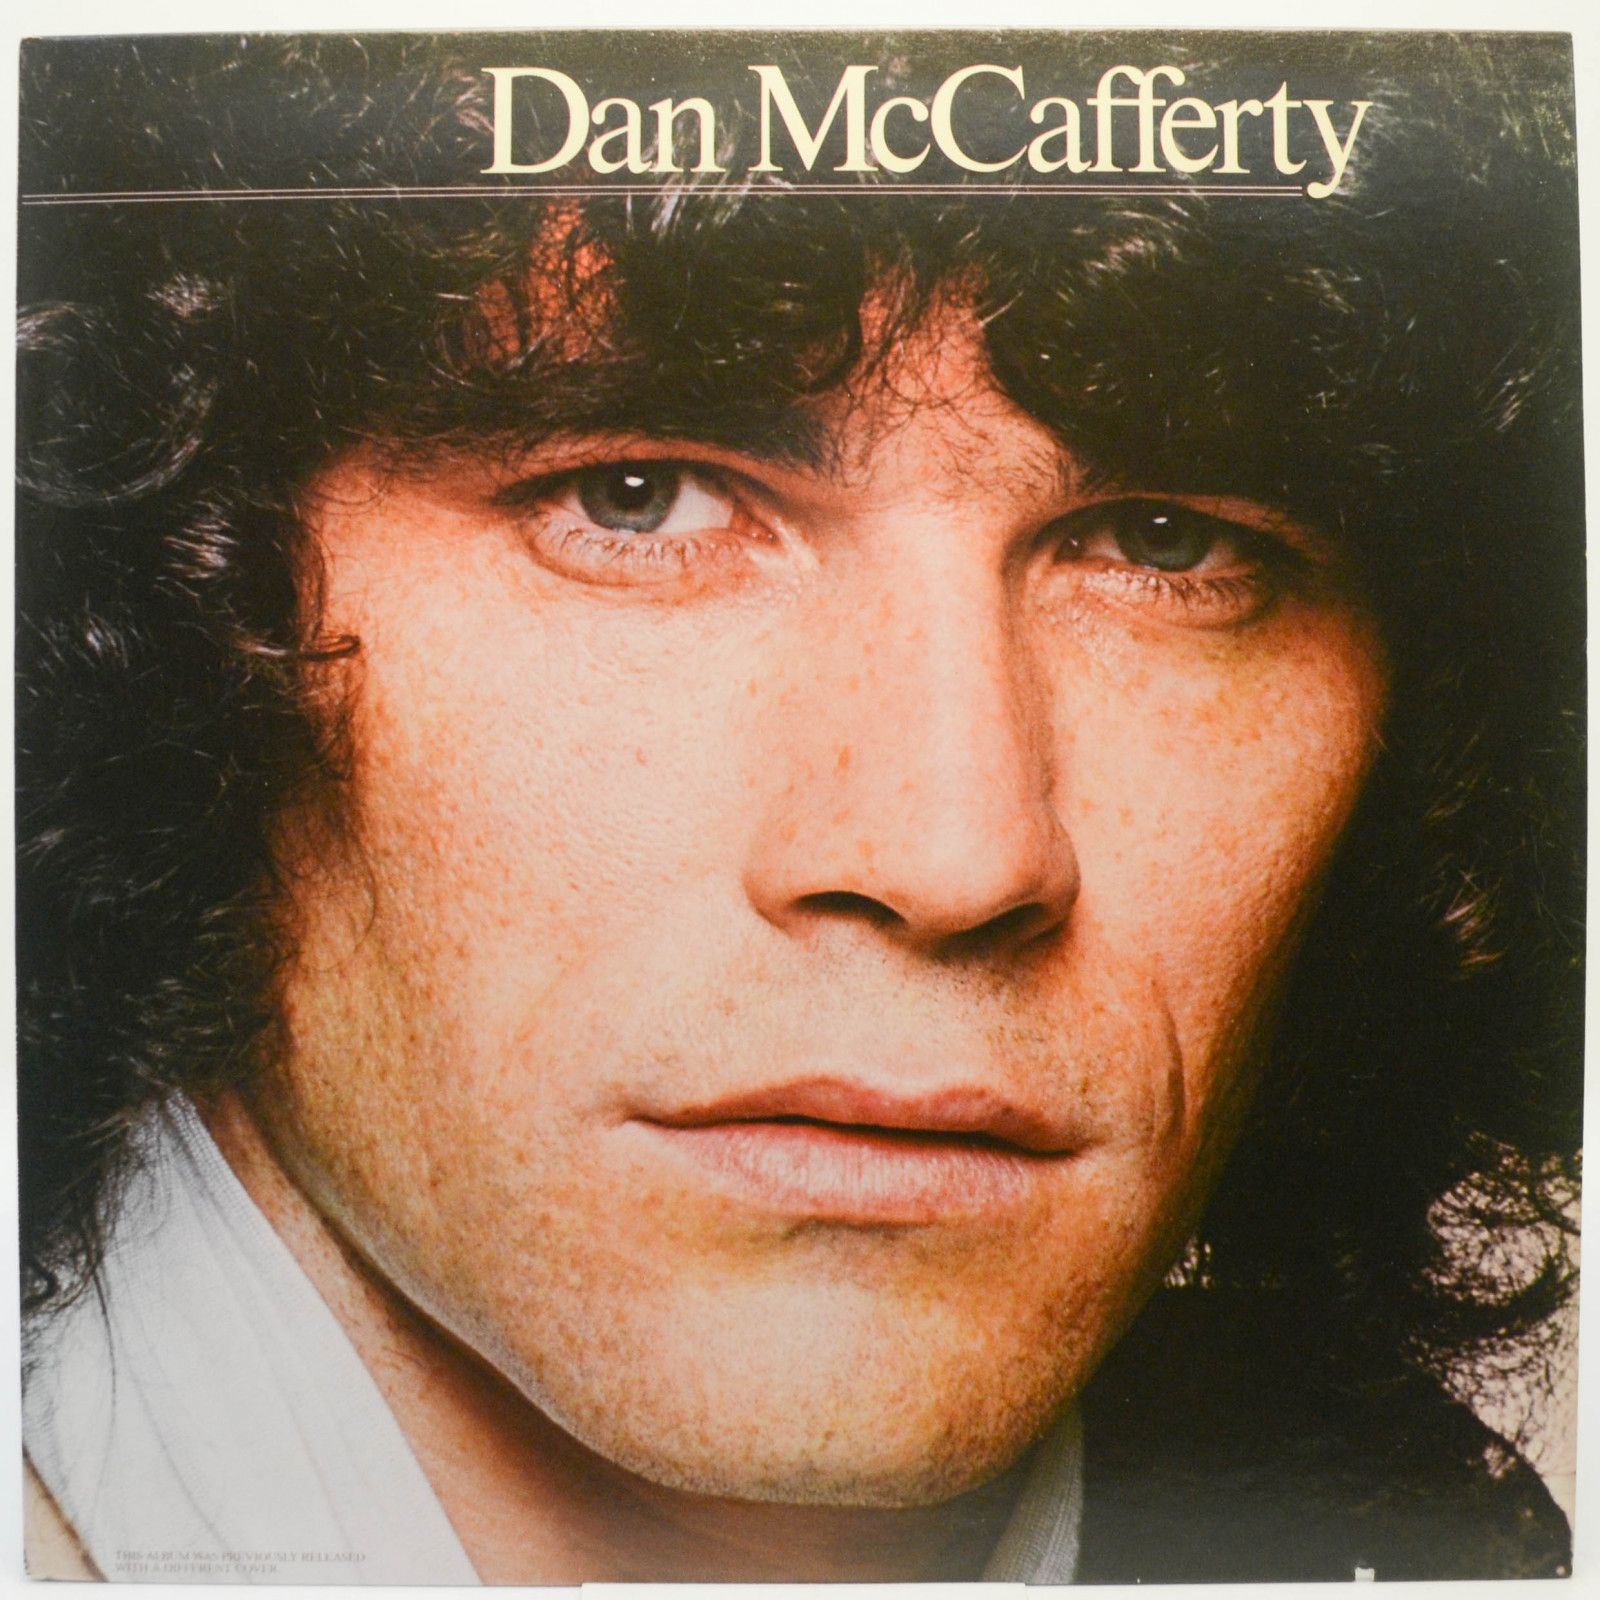 Dan McCafferty — Dan McCafferty (USA), 1975